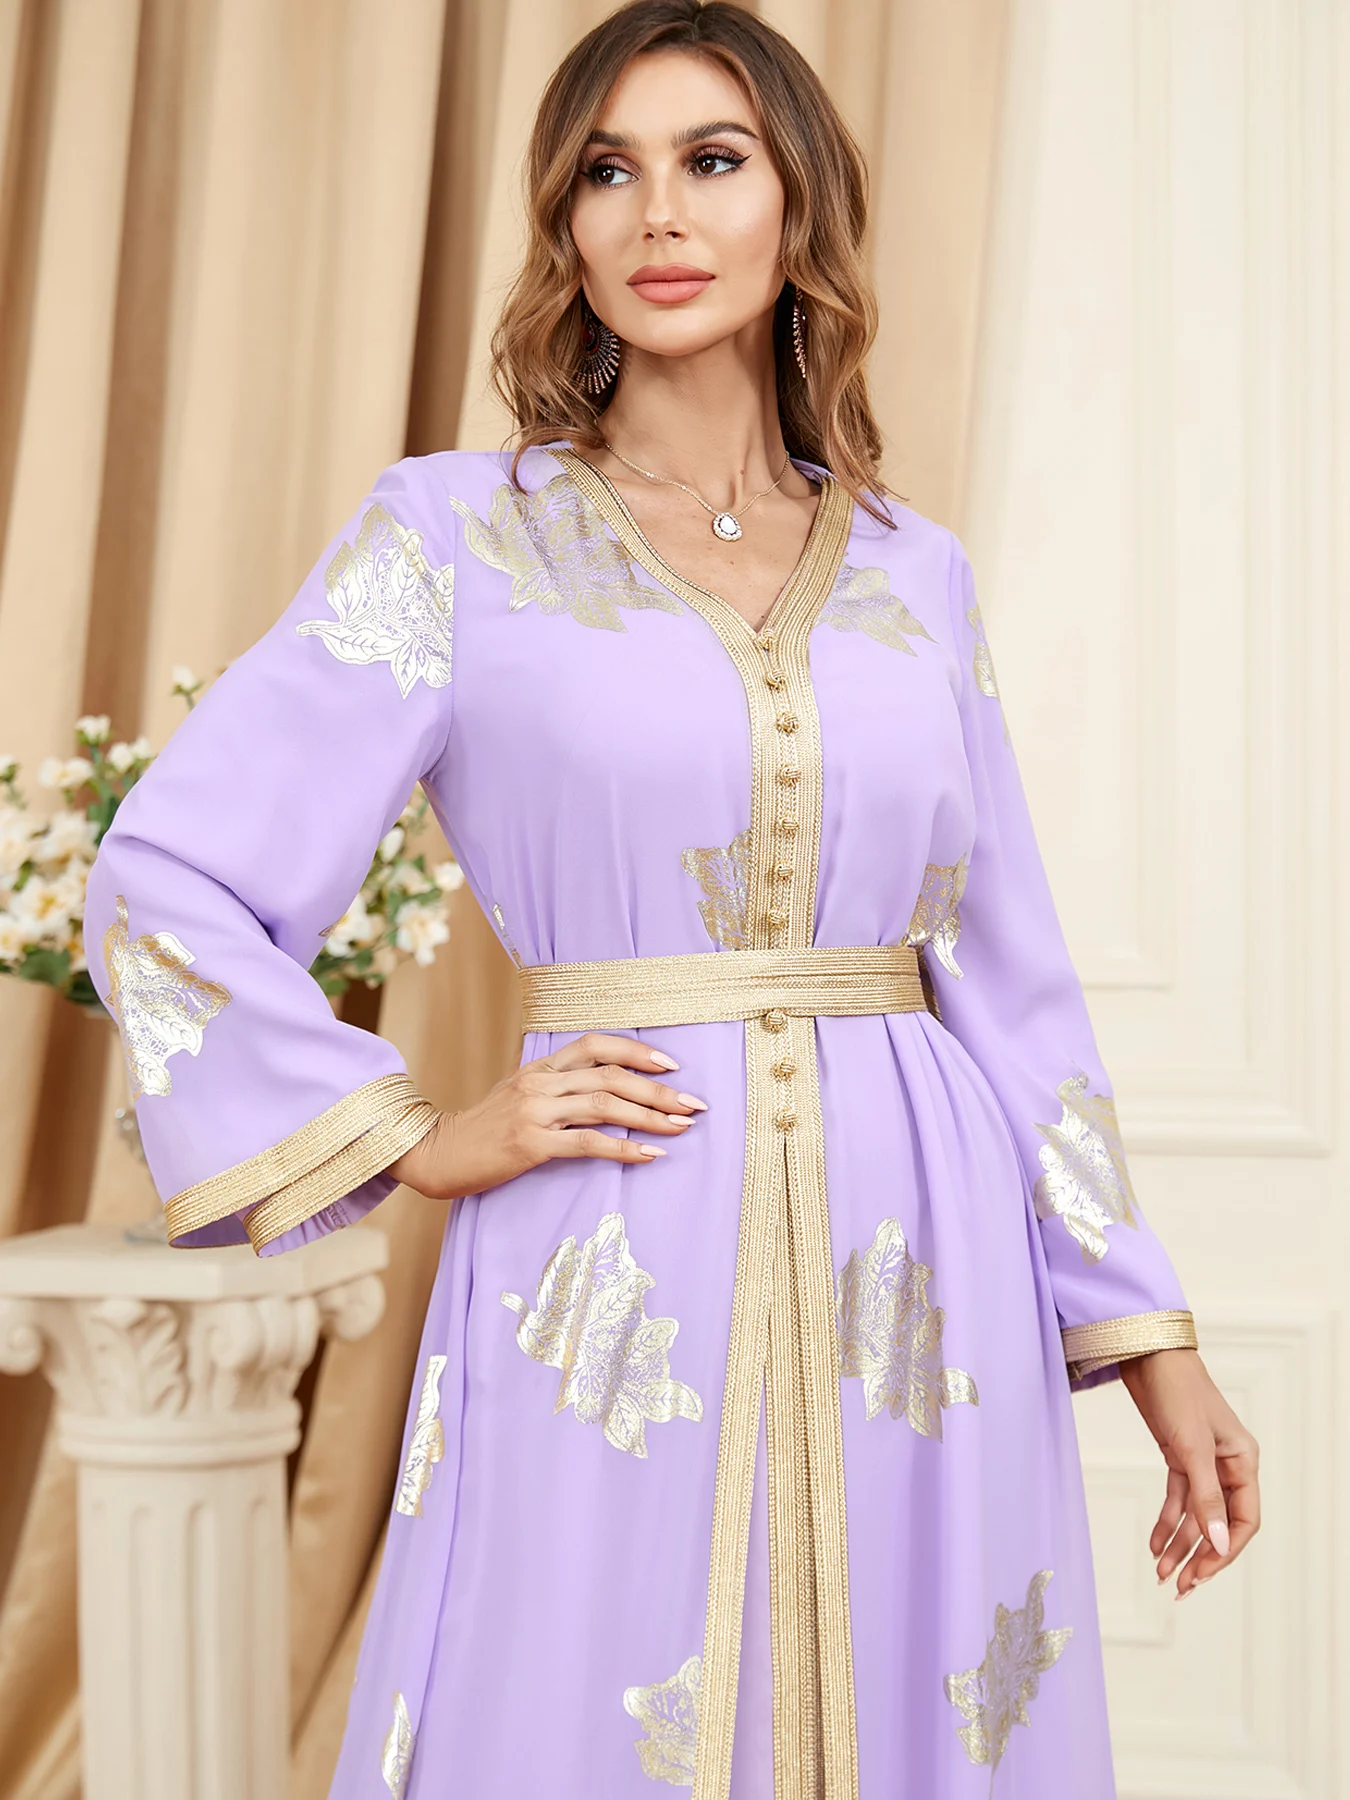 BNSQ 3371# 2023 New Chiffon Gilt Two-piece Set Elegant Fashion Muslim Dress